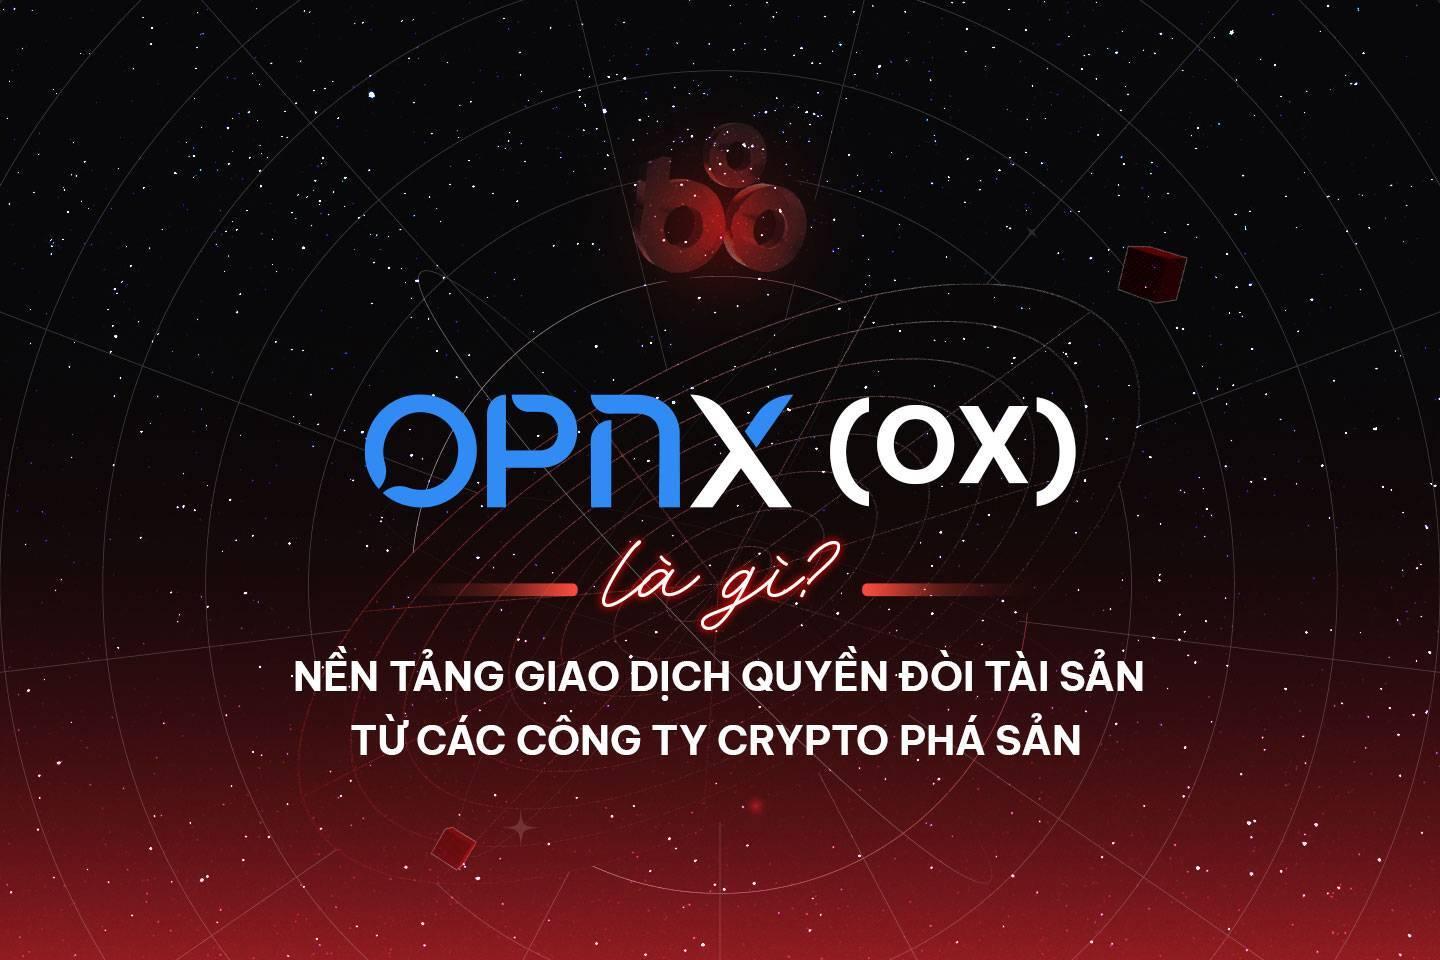 opnx-ox-la-gi-nen-tang-giao-dich-quyen-doi-tai-san-tu-cac-cong-ty-crypto-pha-san